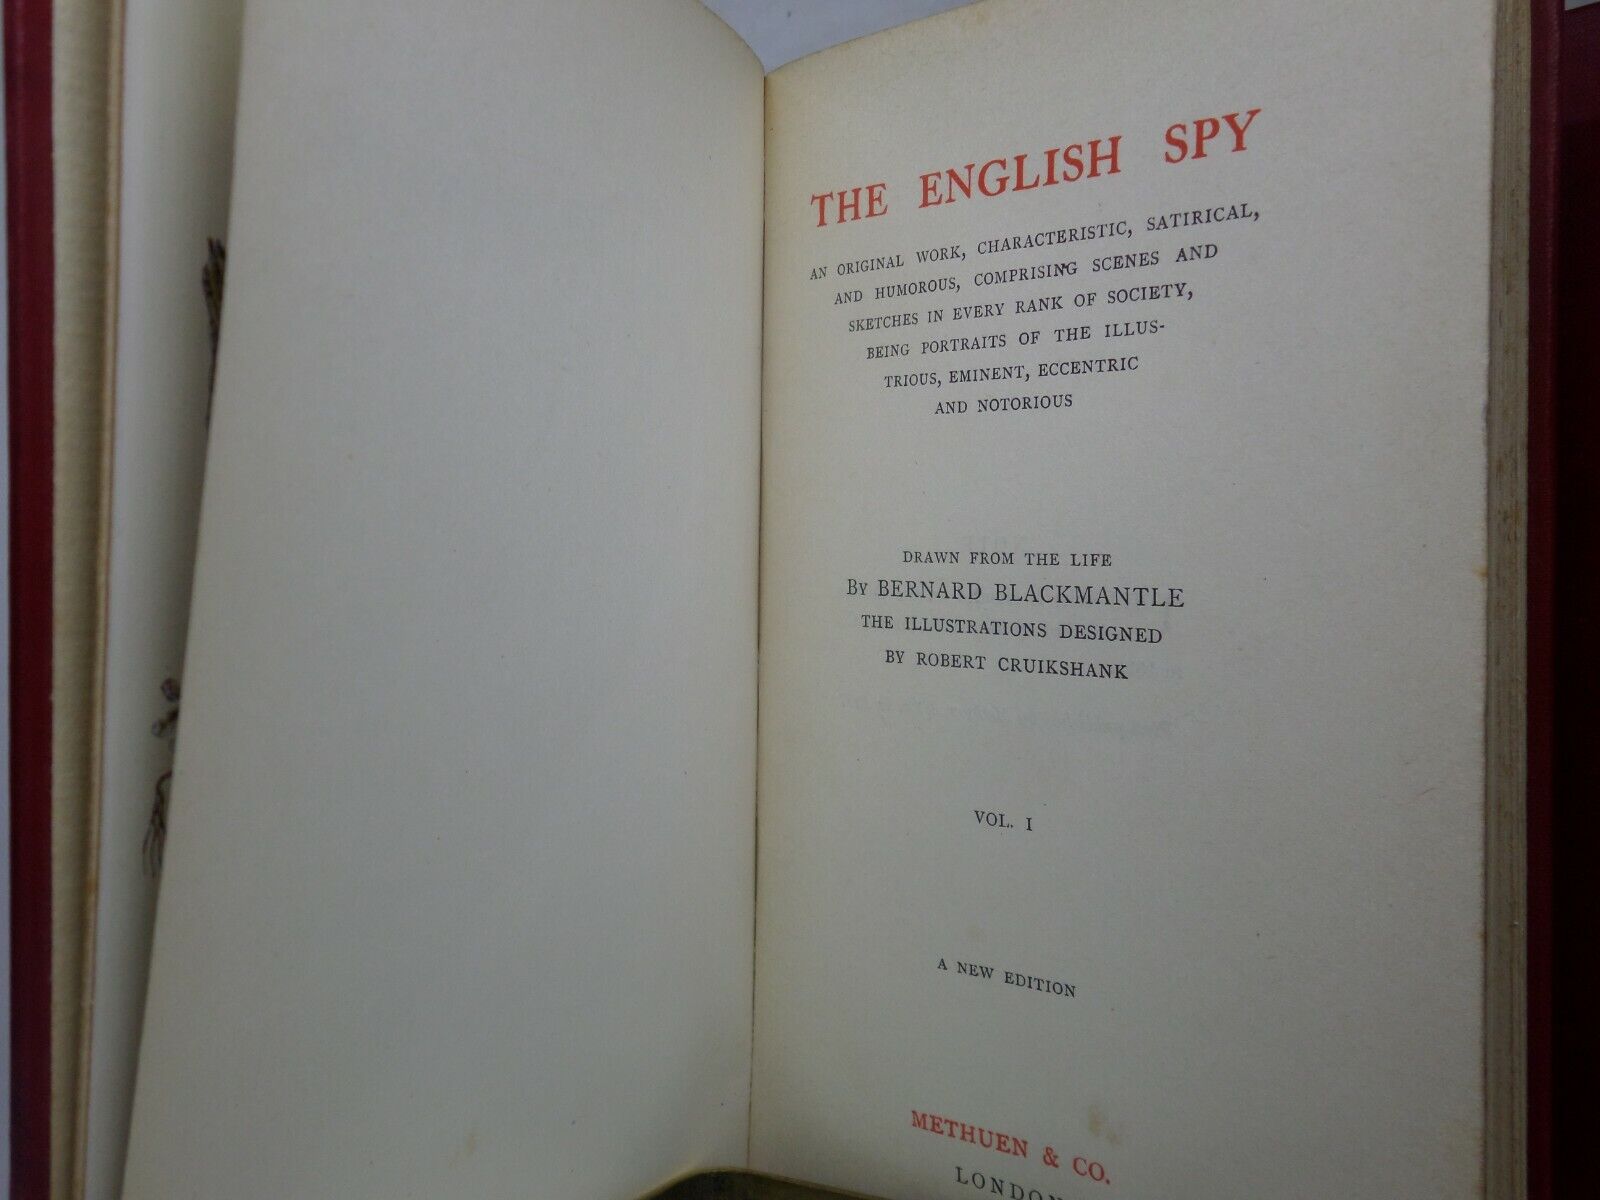 THE ENGLISH SPY BY BERNARD BLACKMANTLE 1907 ILLUSTRATIONS BY ROBERT CRUIKSHANK